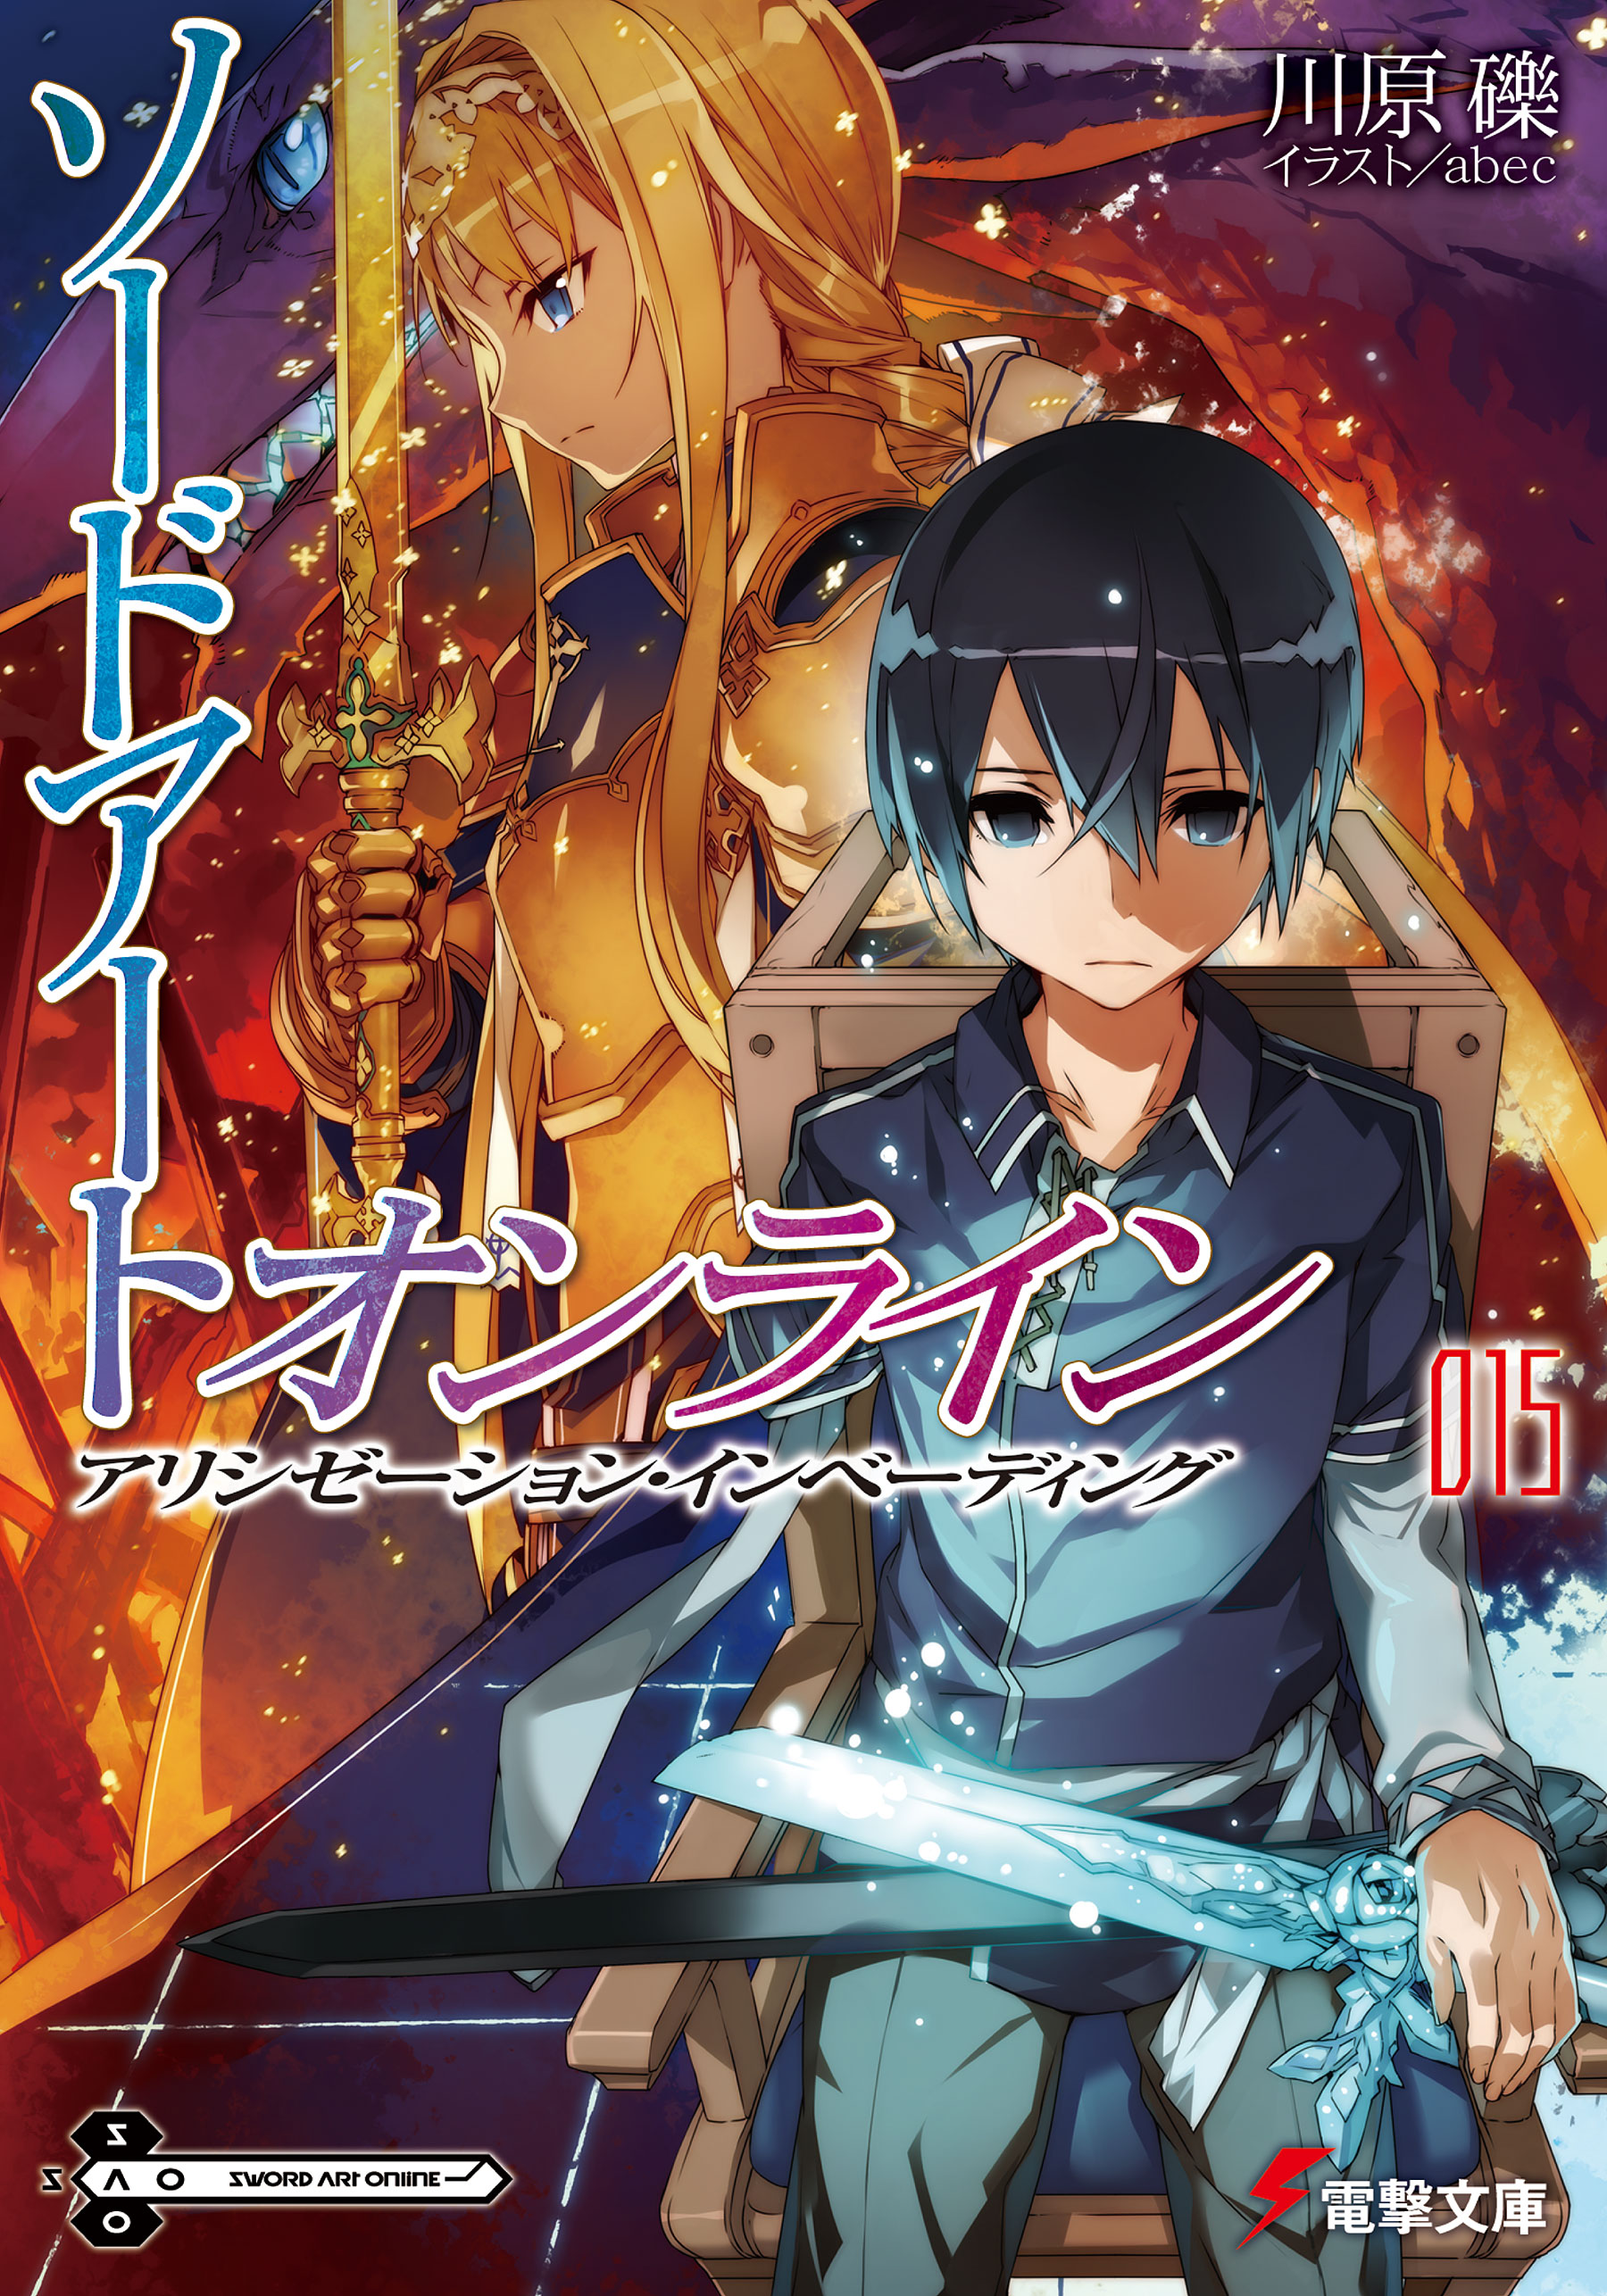 Sword Art Online - Progressive Volume 05 (manga), Sword Art Online Wiki